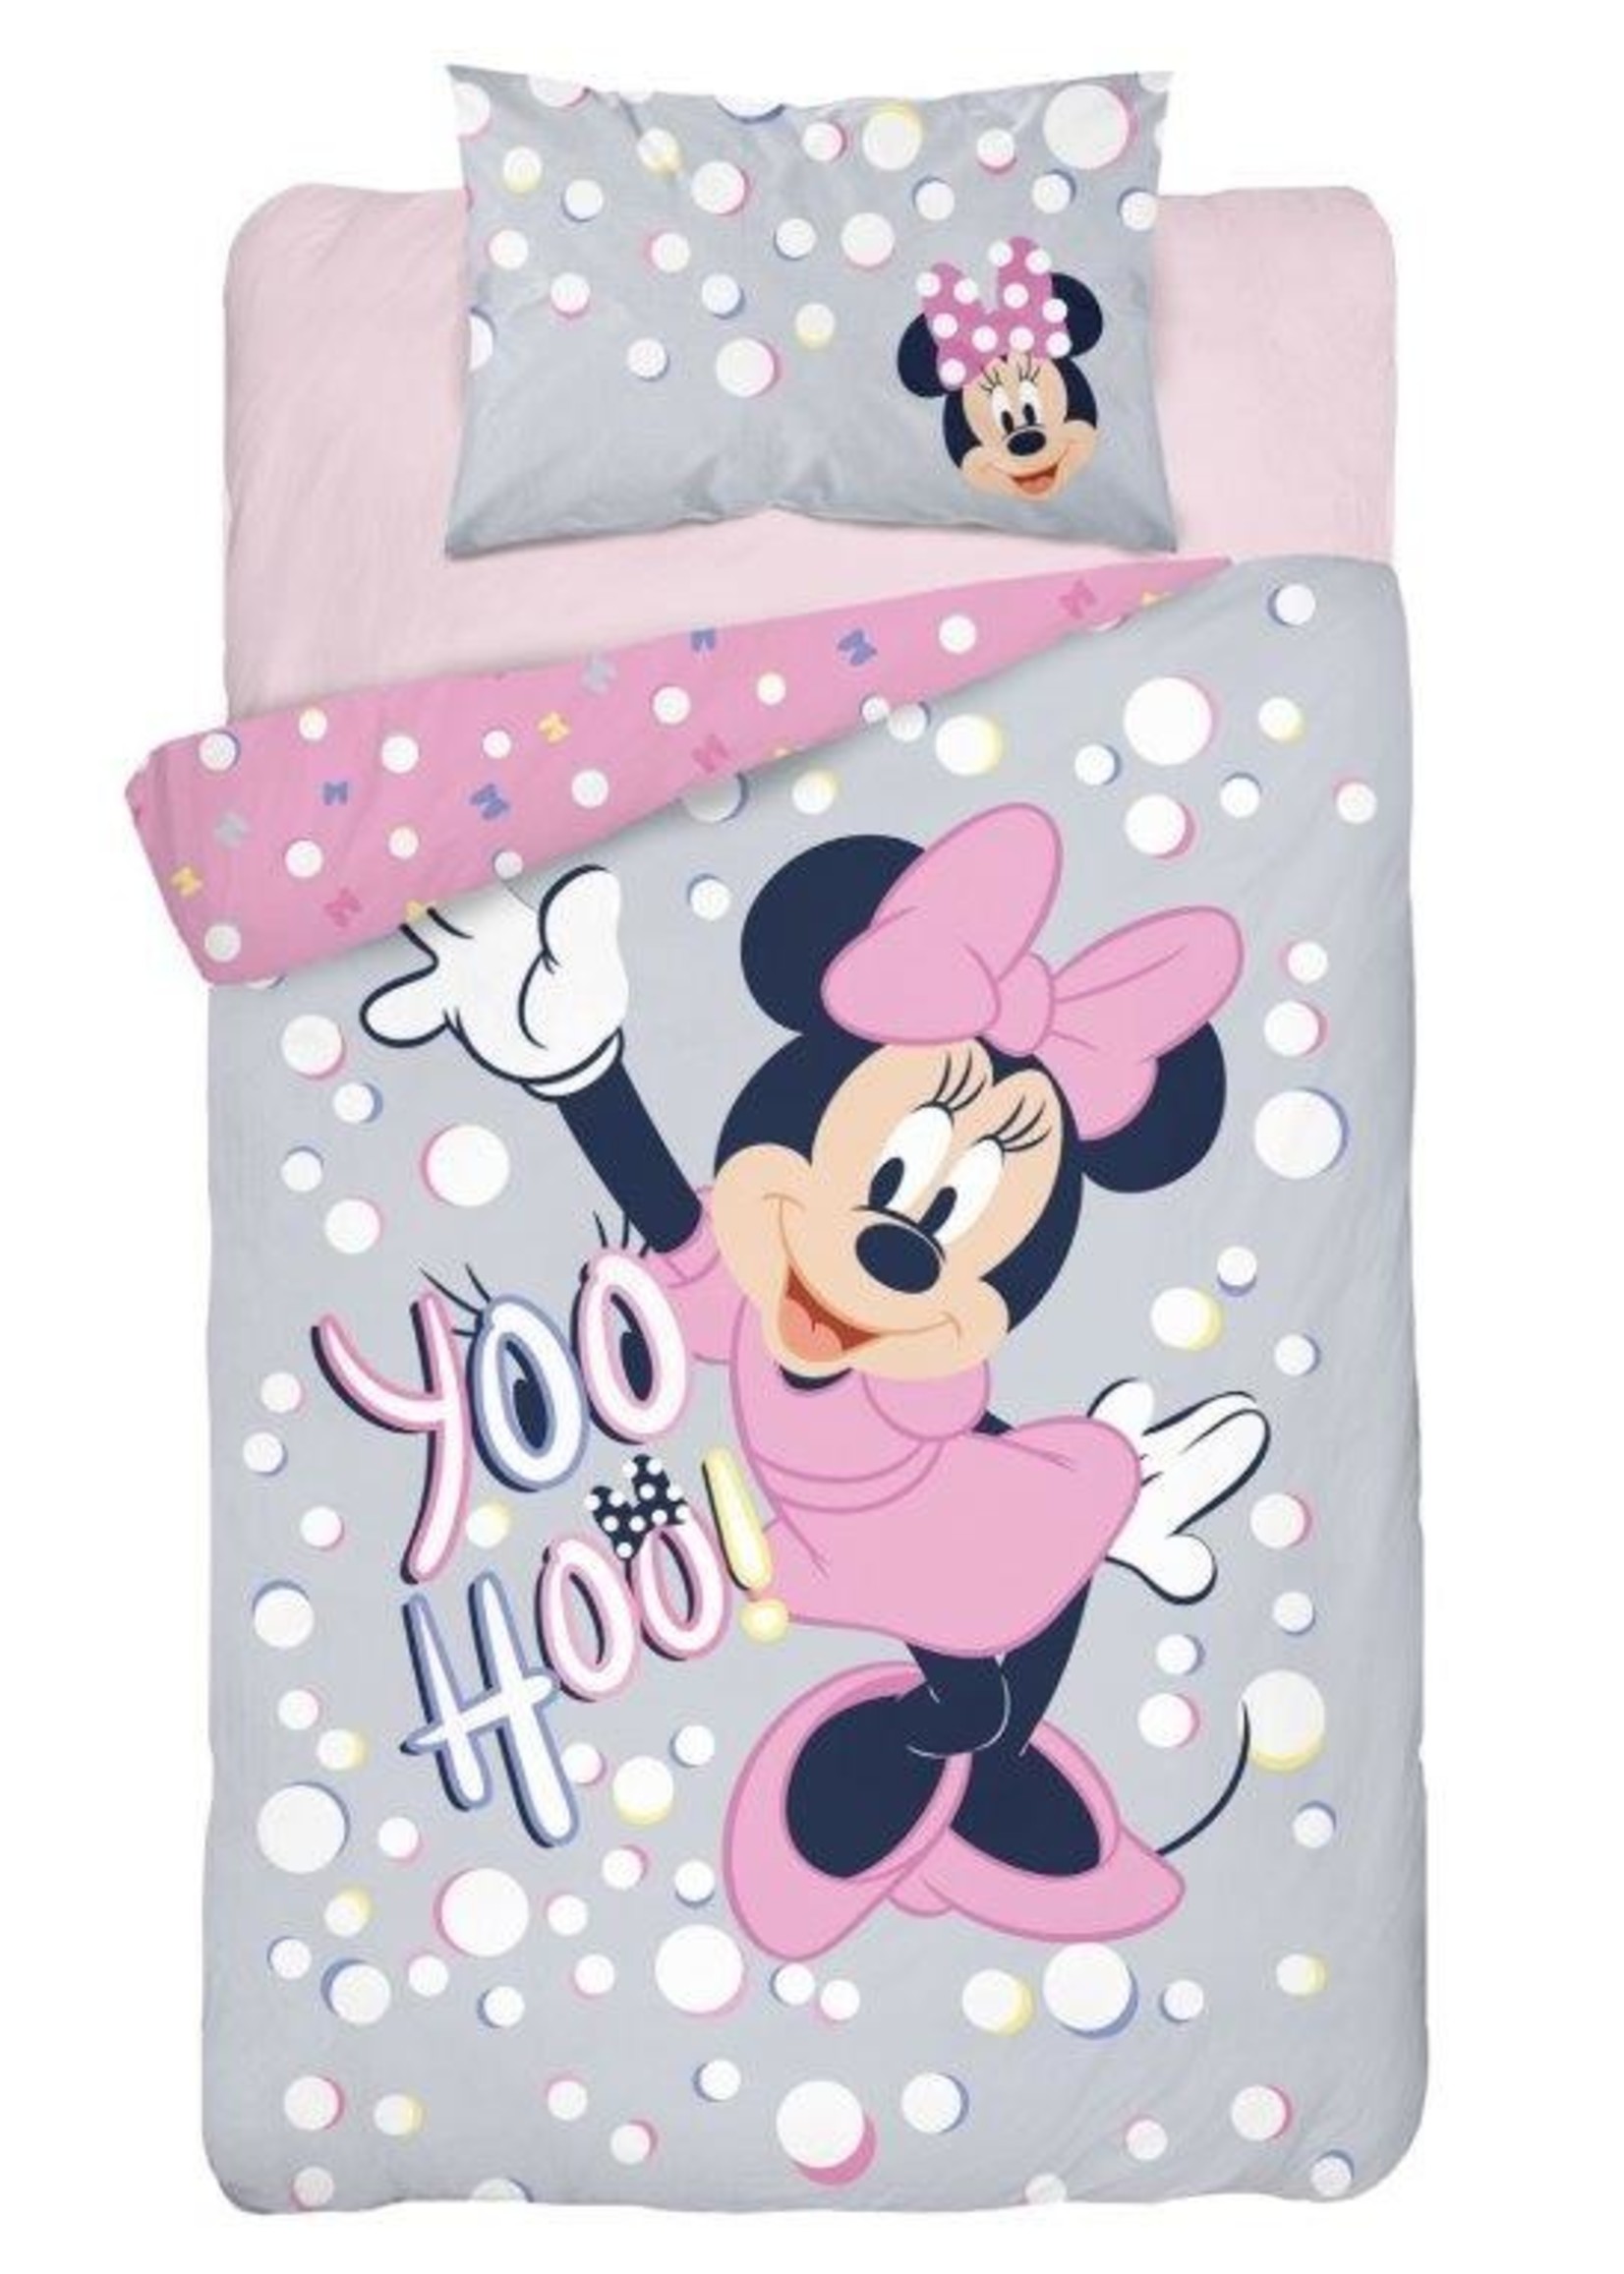 Disney Minnie Mouse  Duvet Cover Set Yoohoo